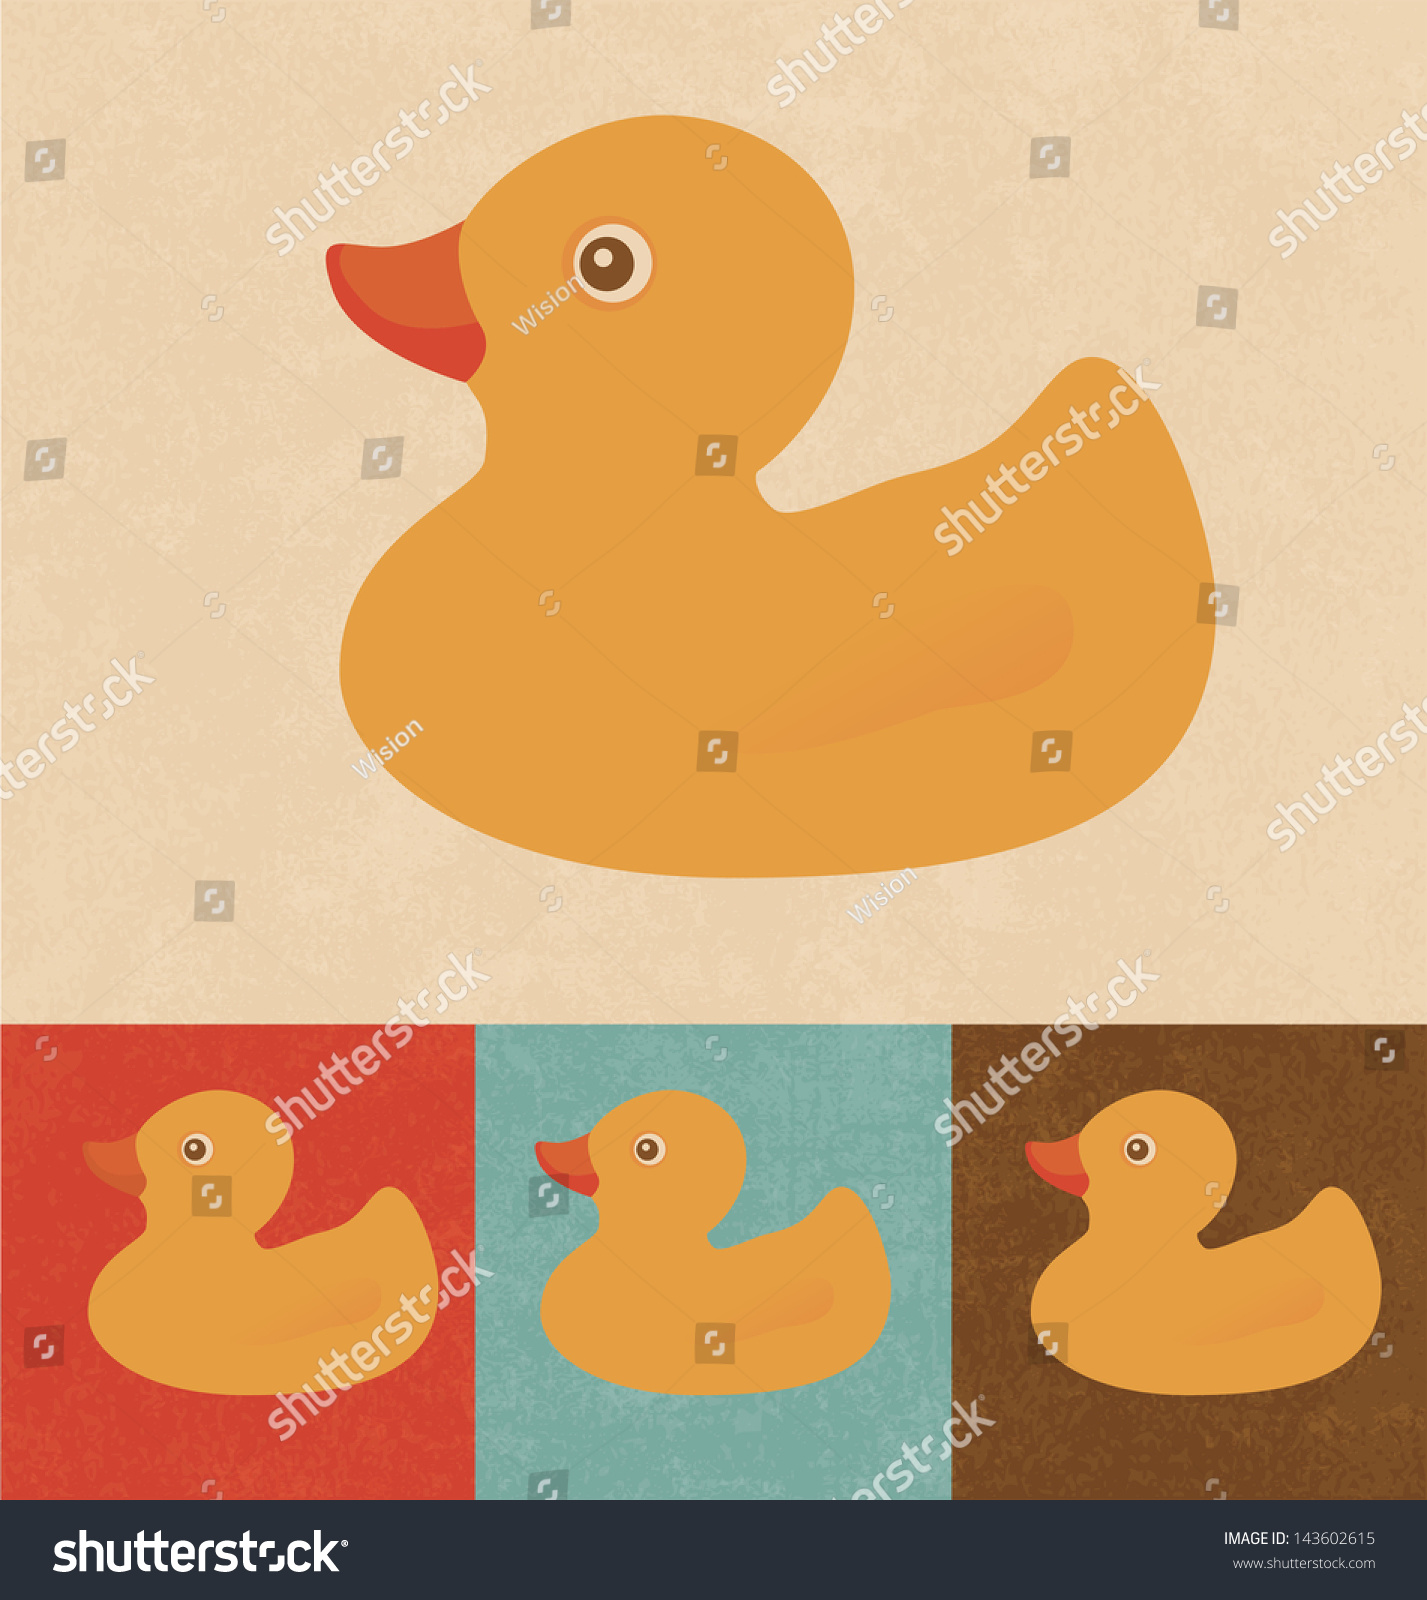 Retro Icons - Rubber Duck Stock Vector Illustration 143602615